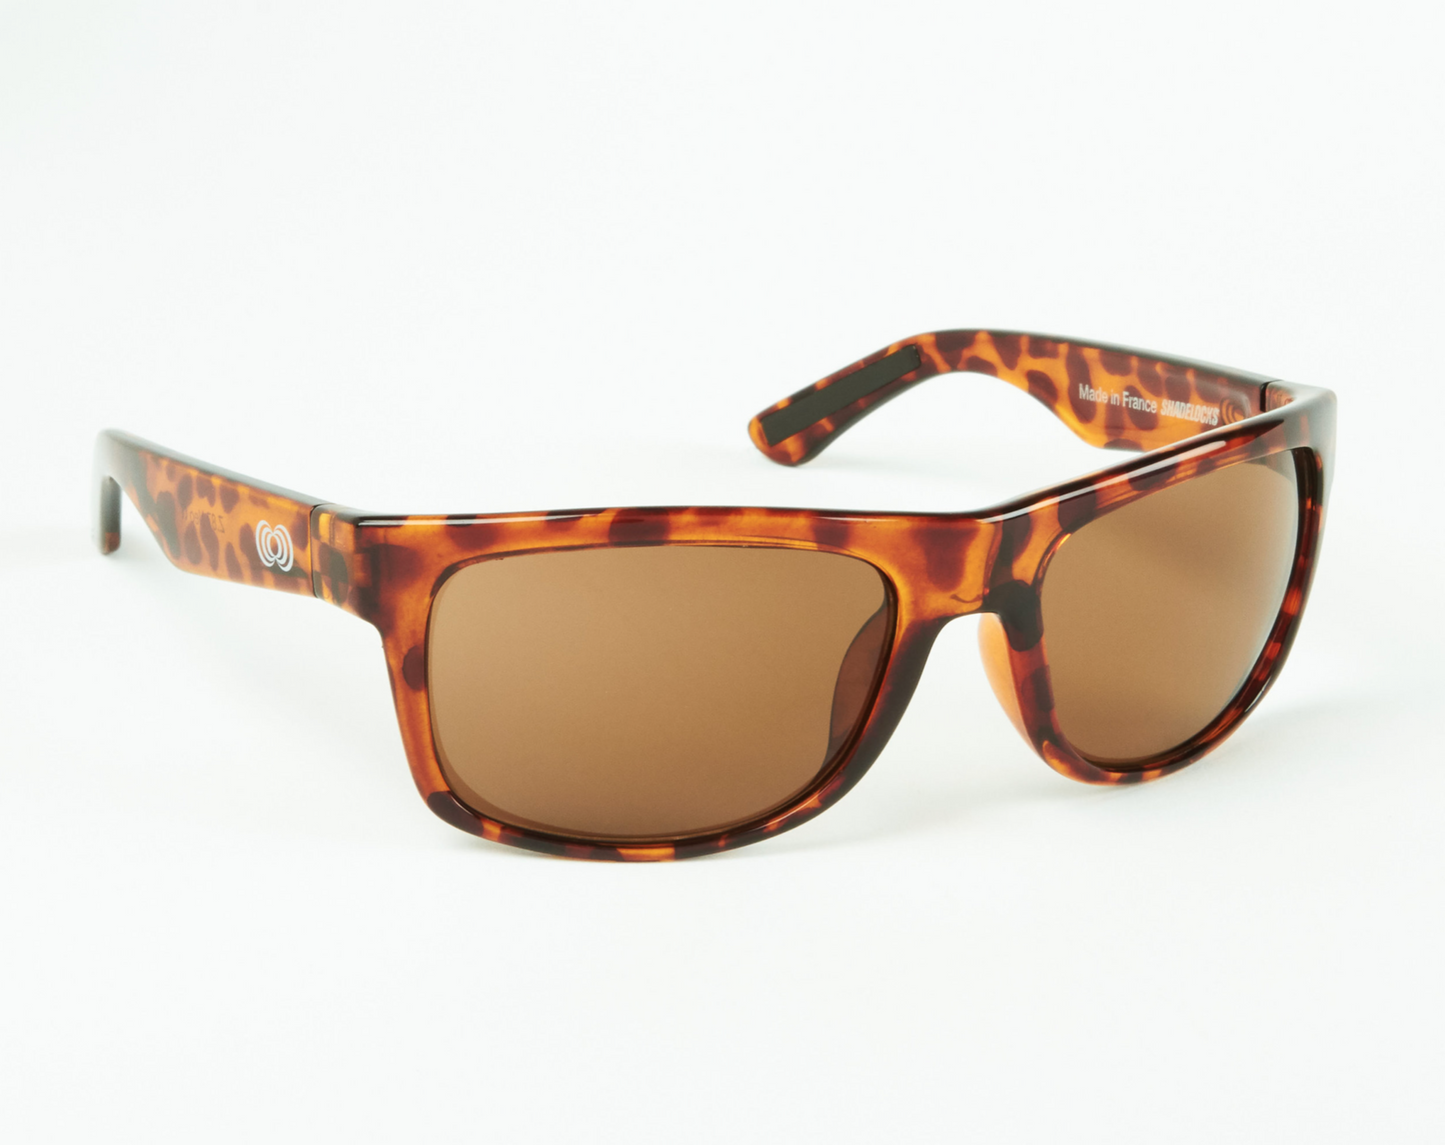 NEO Tortoise Magnetic Sunglasses